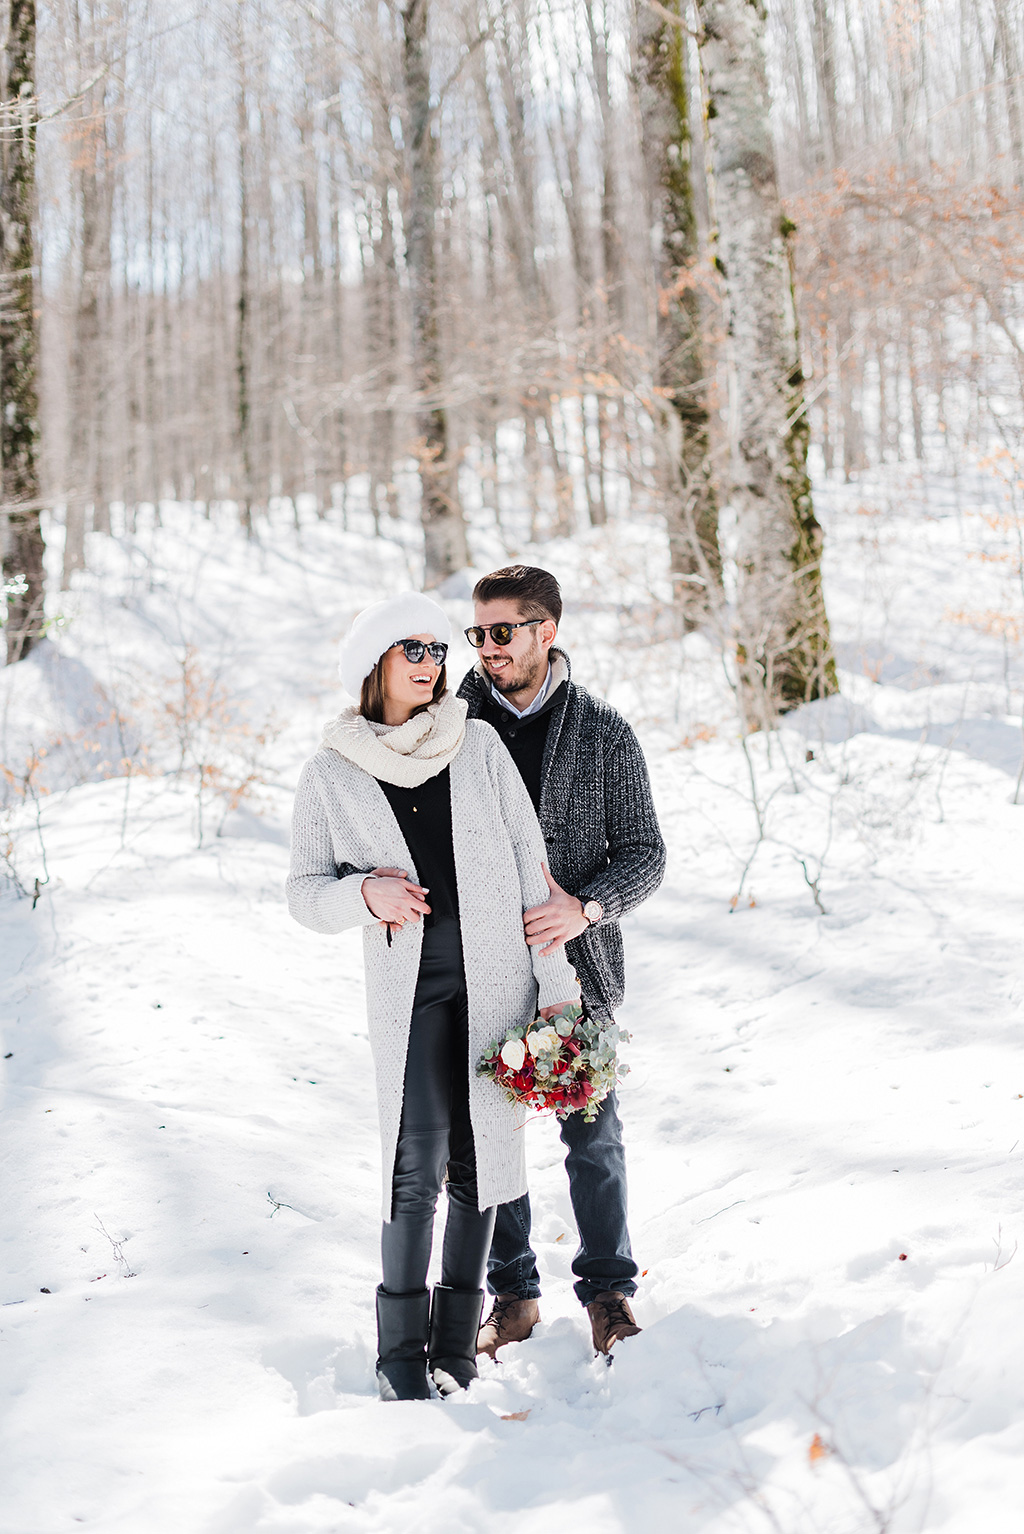 Prewedding φωτογράφιση στα χιόνια, μια υπέροχη εμπειρία για το ζευγάρι, George Kostopoulos Fine Art Wedding Photography